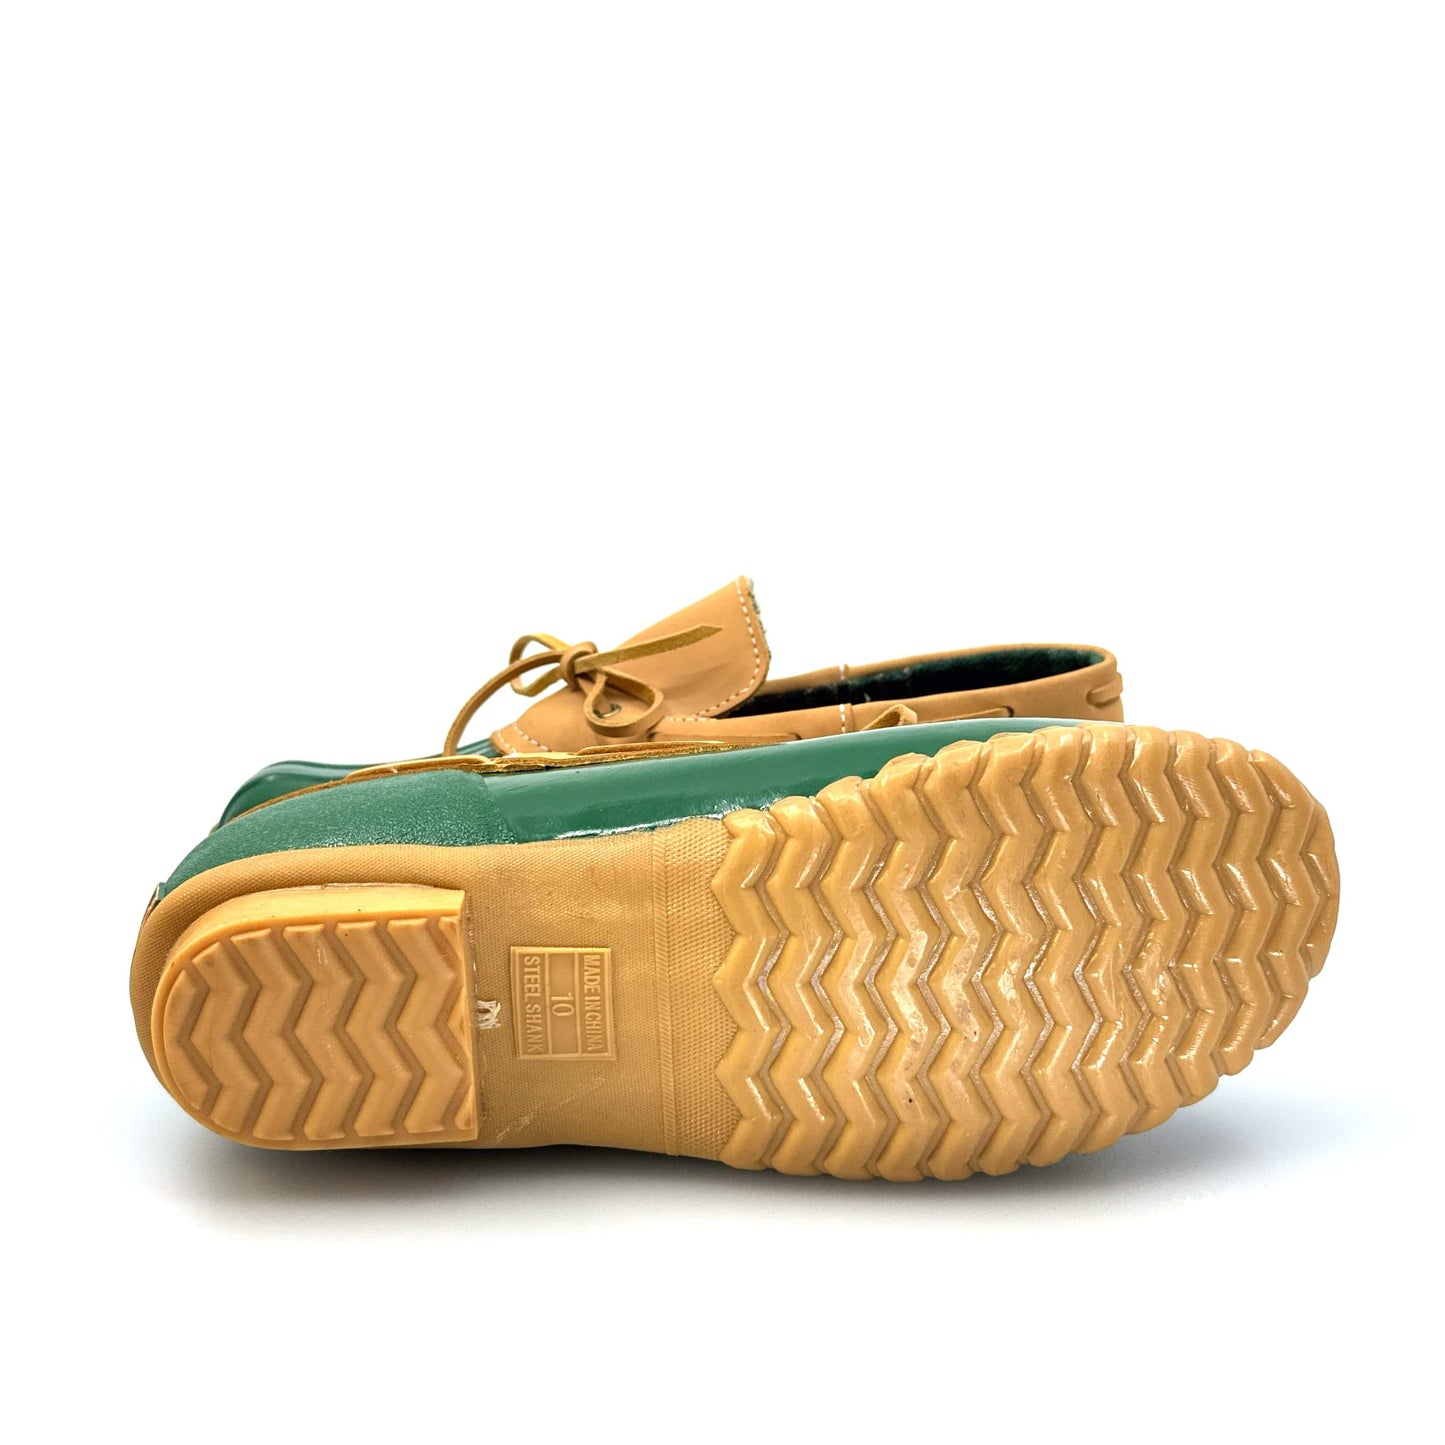 Aqua Stop Womens Size 10M Green Waterproof Rubber Leather Duck Boot Shoes EUC